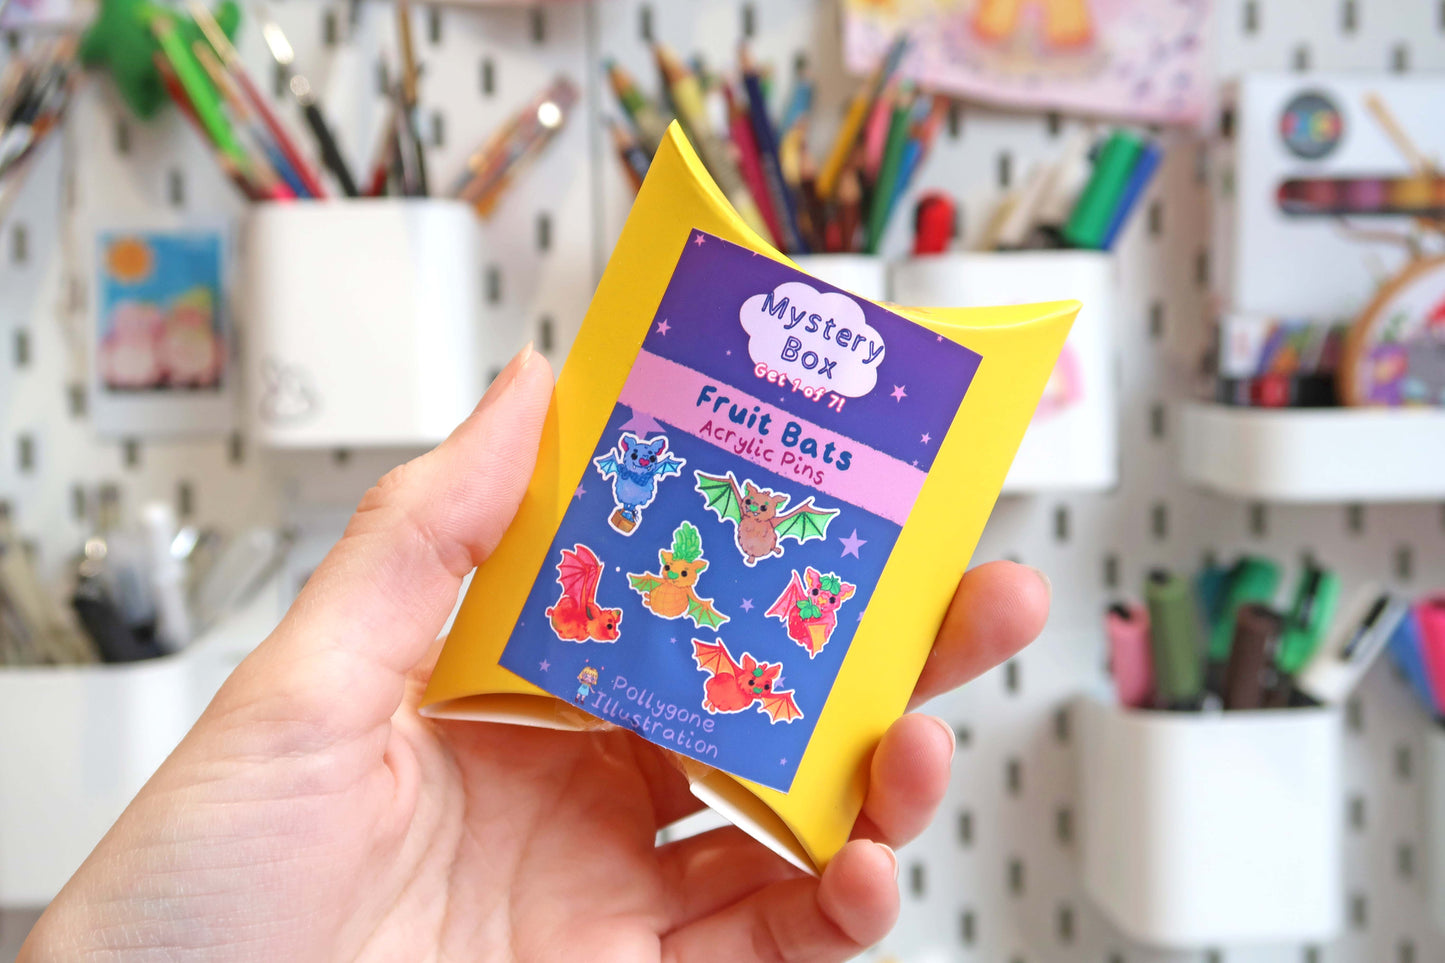 Fruit Bat Mystery Box Acrylic Pins Surprise